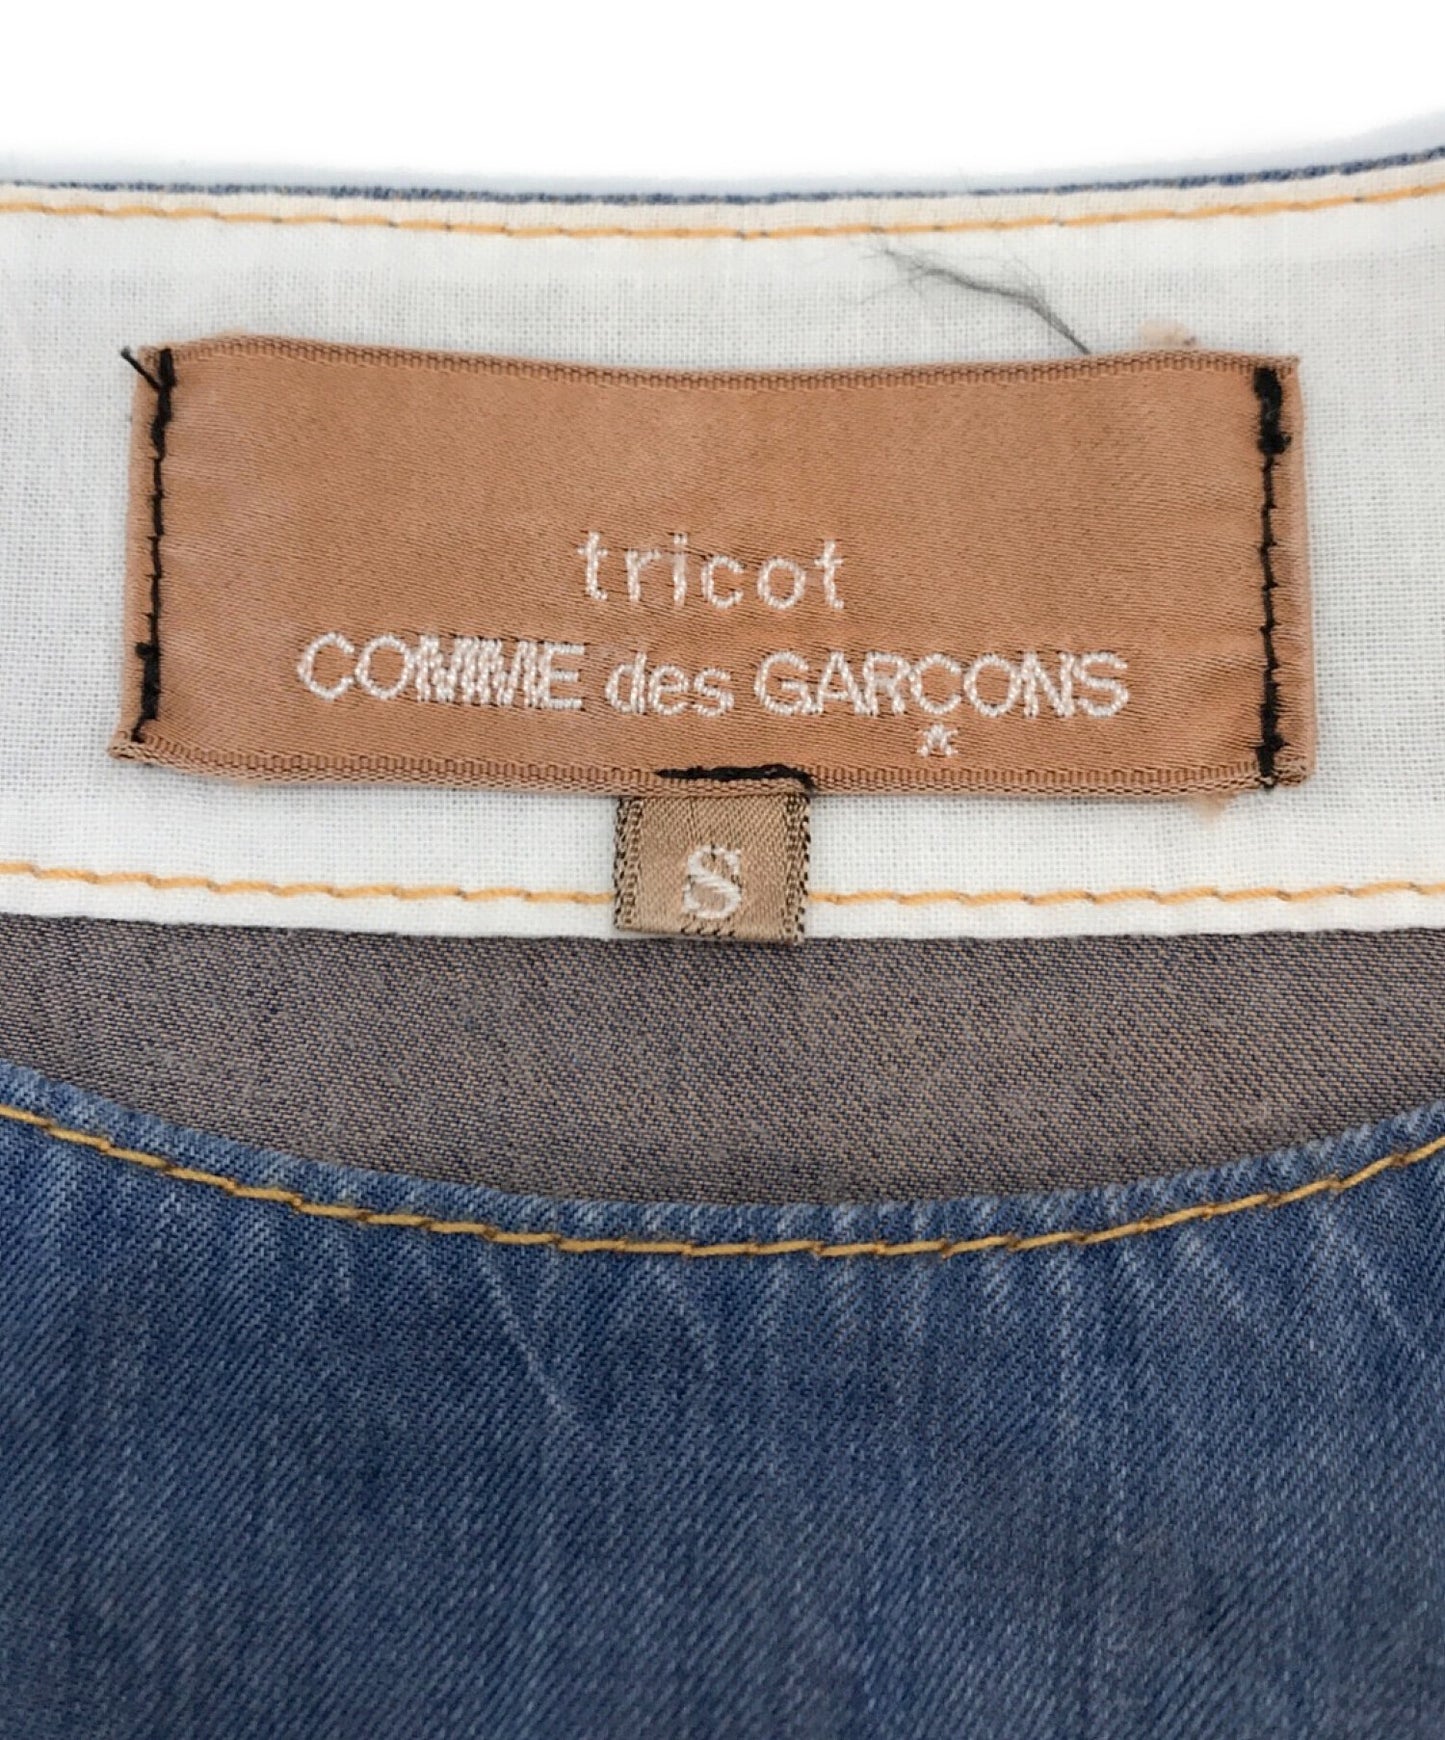 TRICOT Comme des Garcons Dungaree Pocket Design 3/4 ความยาวแขนเสื้อ TA-B012